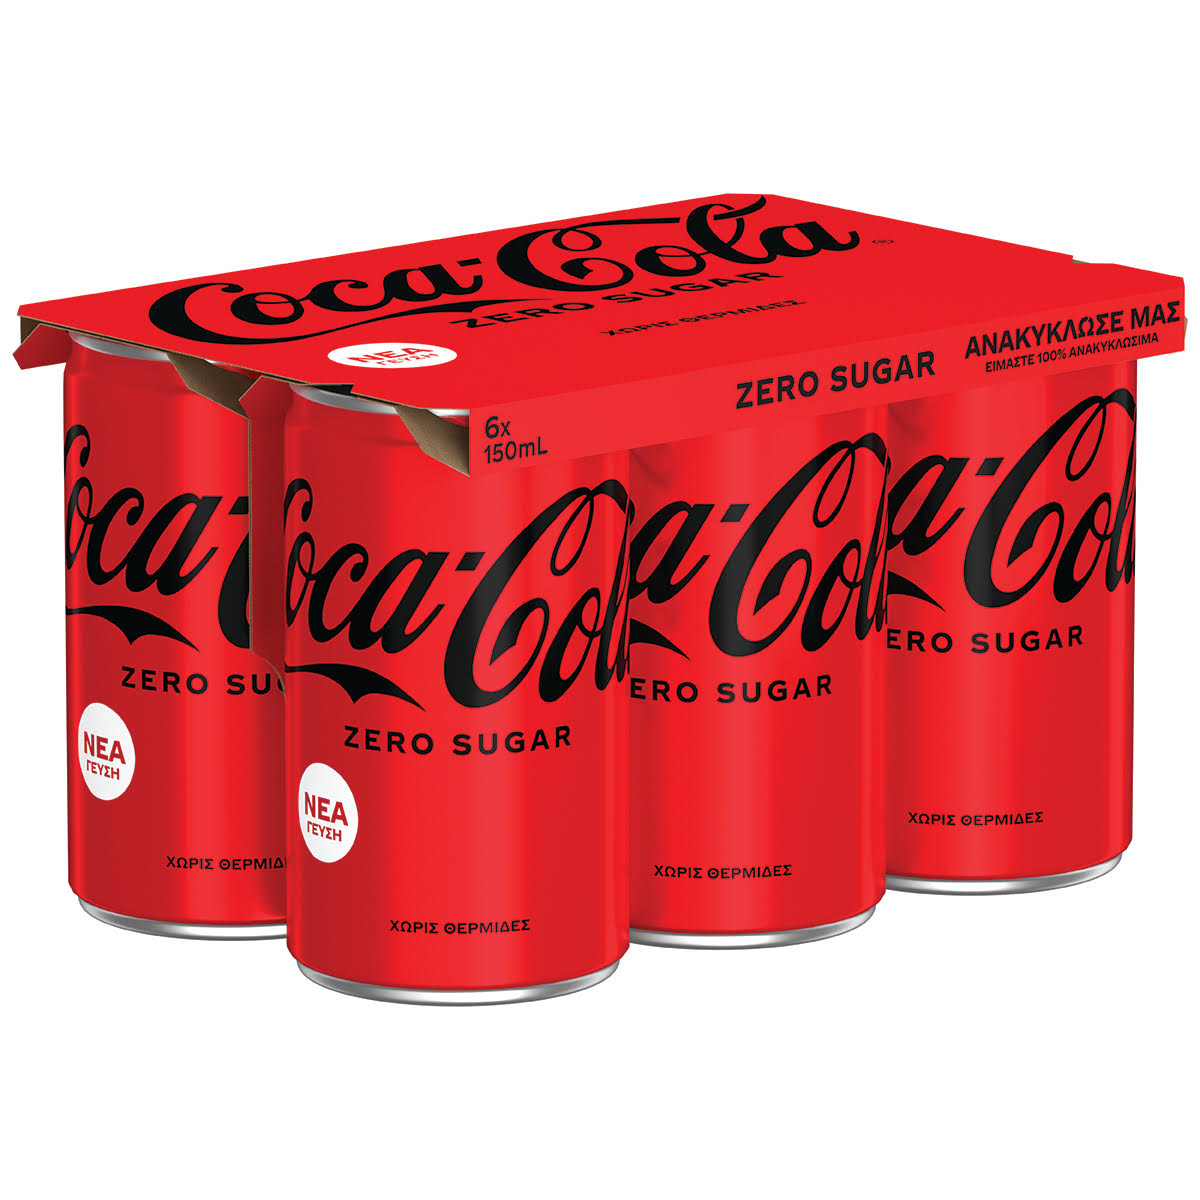 Coca-Cola Τρία Έψιλον: Εξέλιξη, Καινοτομία και Αειφόρος Ανάπτυξη στη Νέα Εποχή 